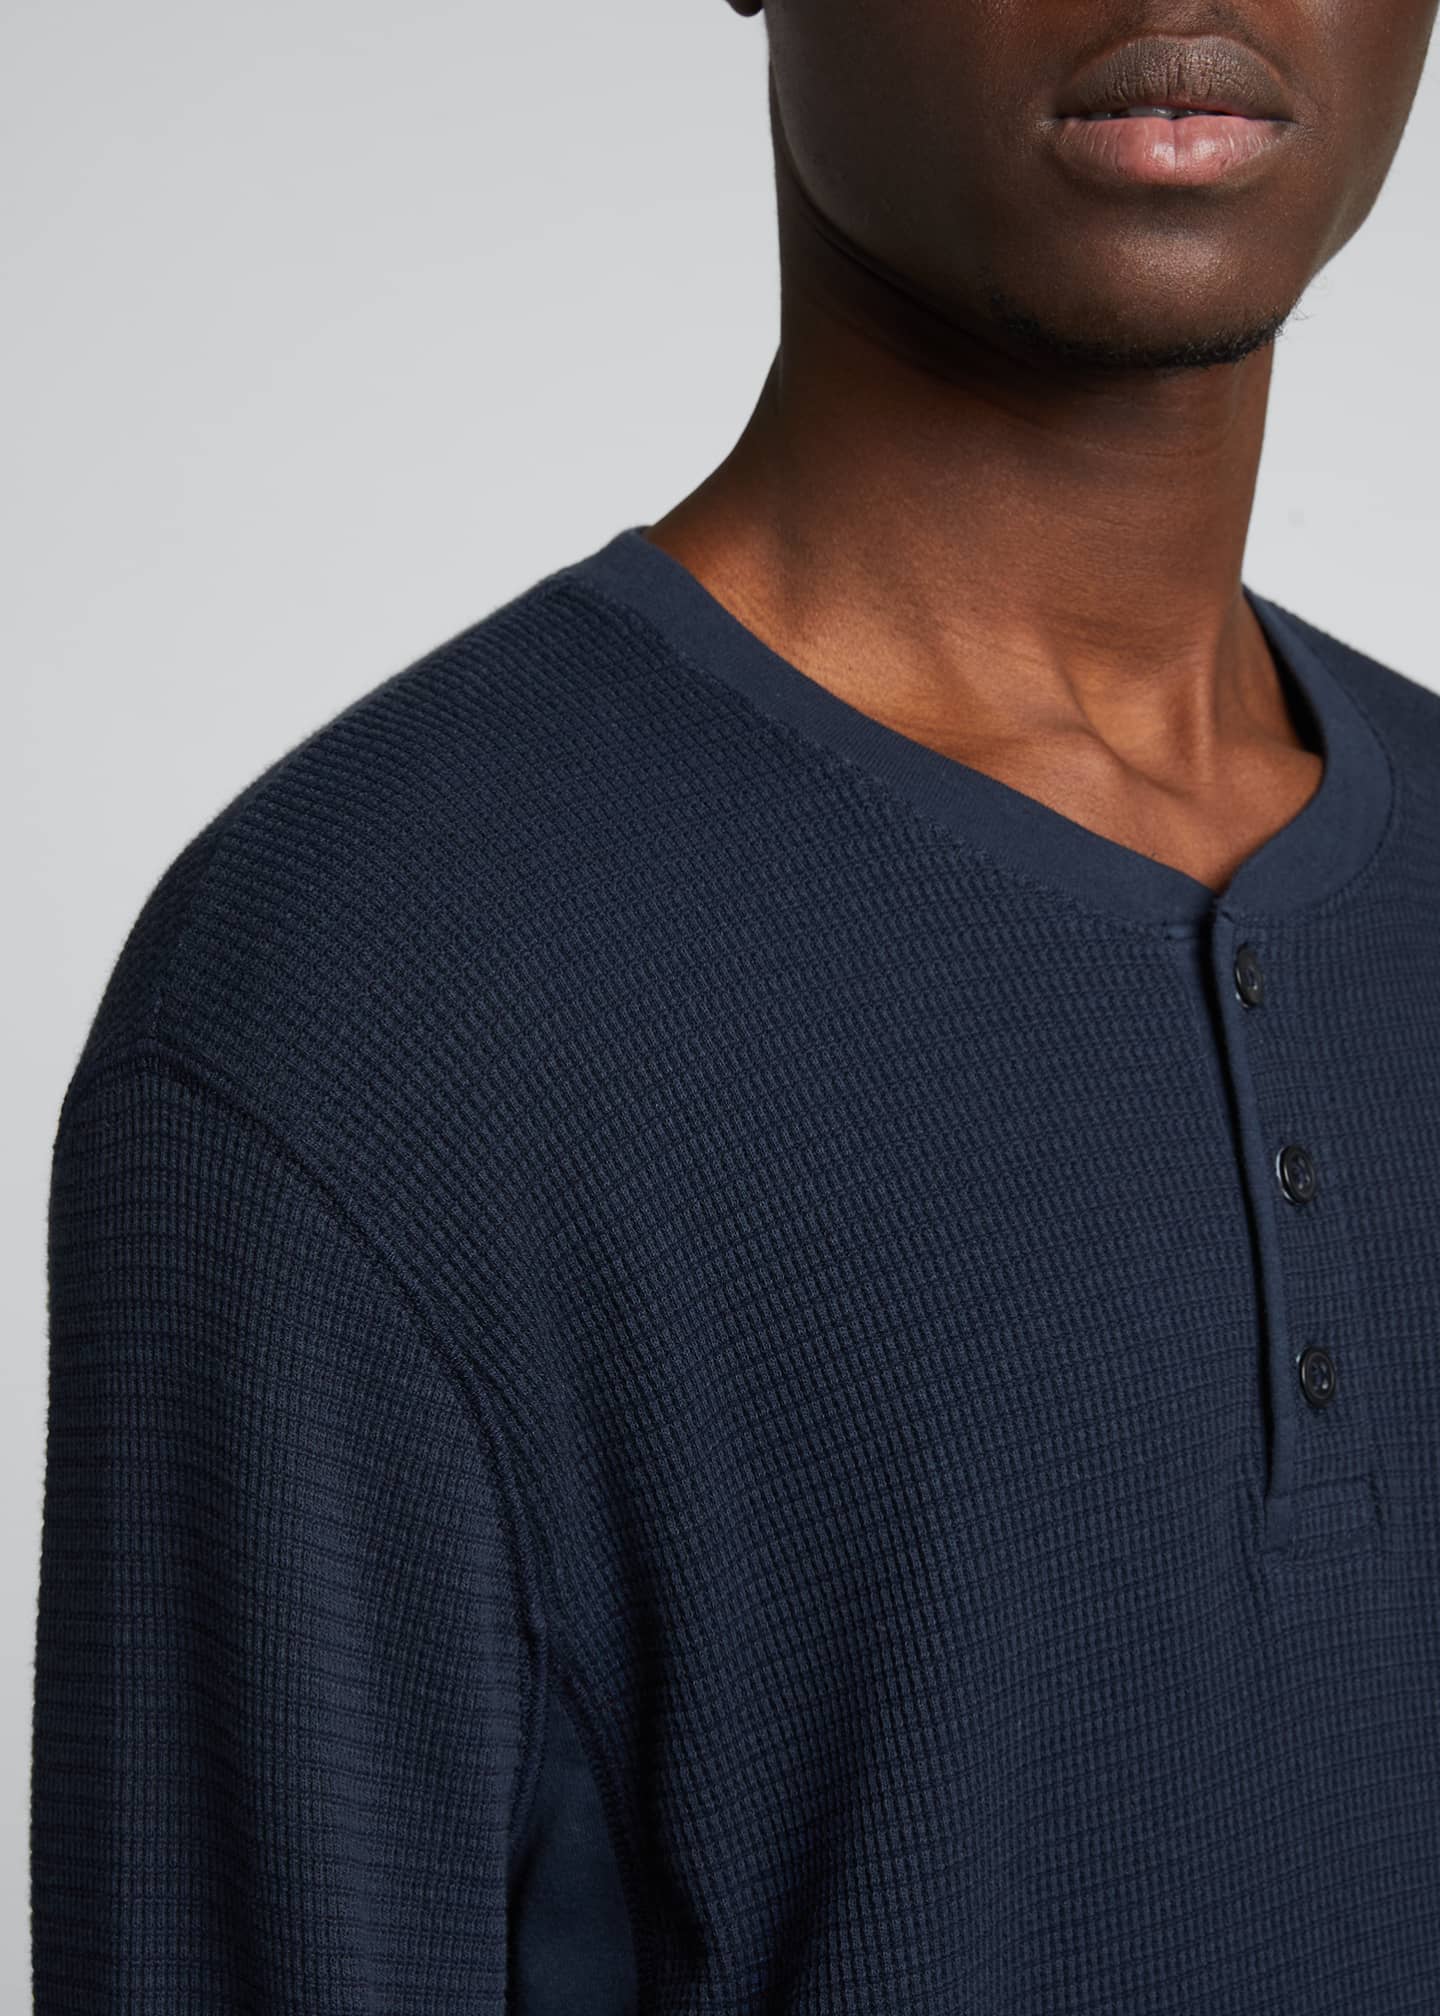 Vince Men's Long-Sleeve Thermal Henley Shirt - Bergdorf Goodman